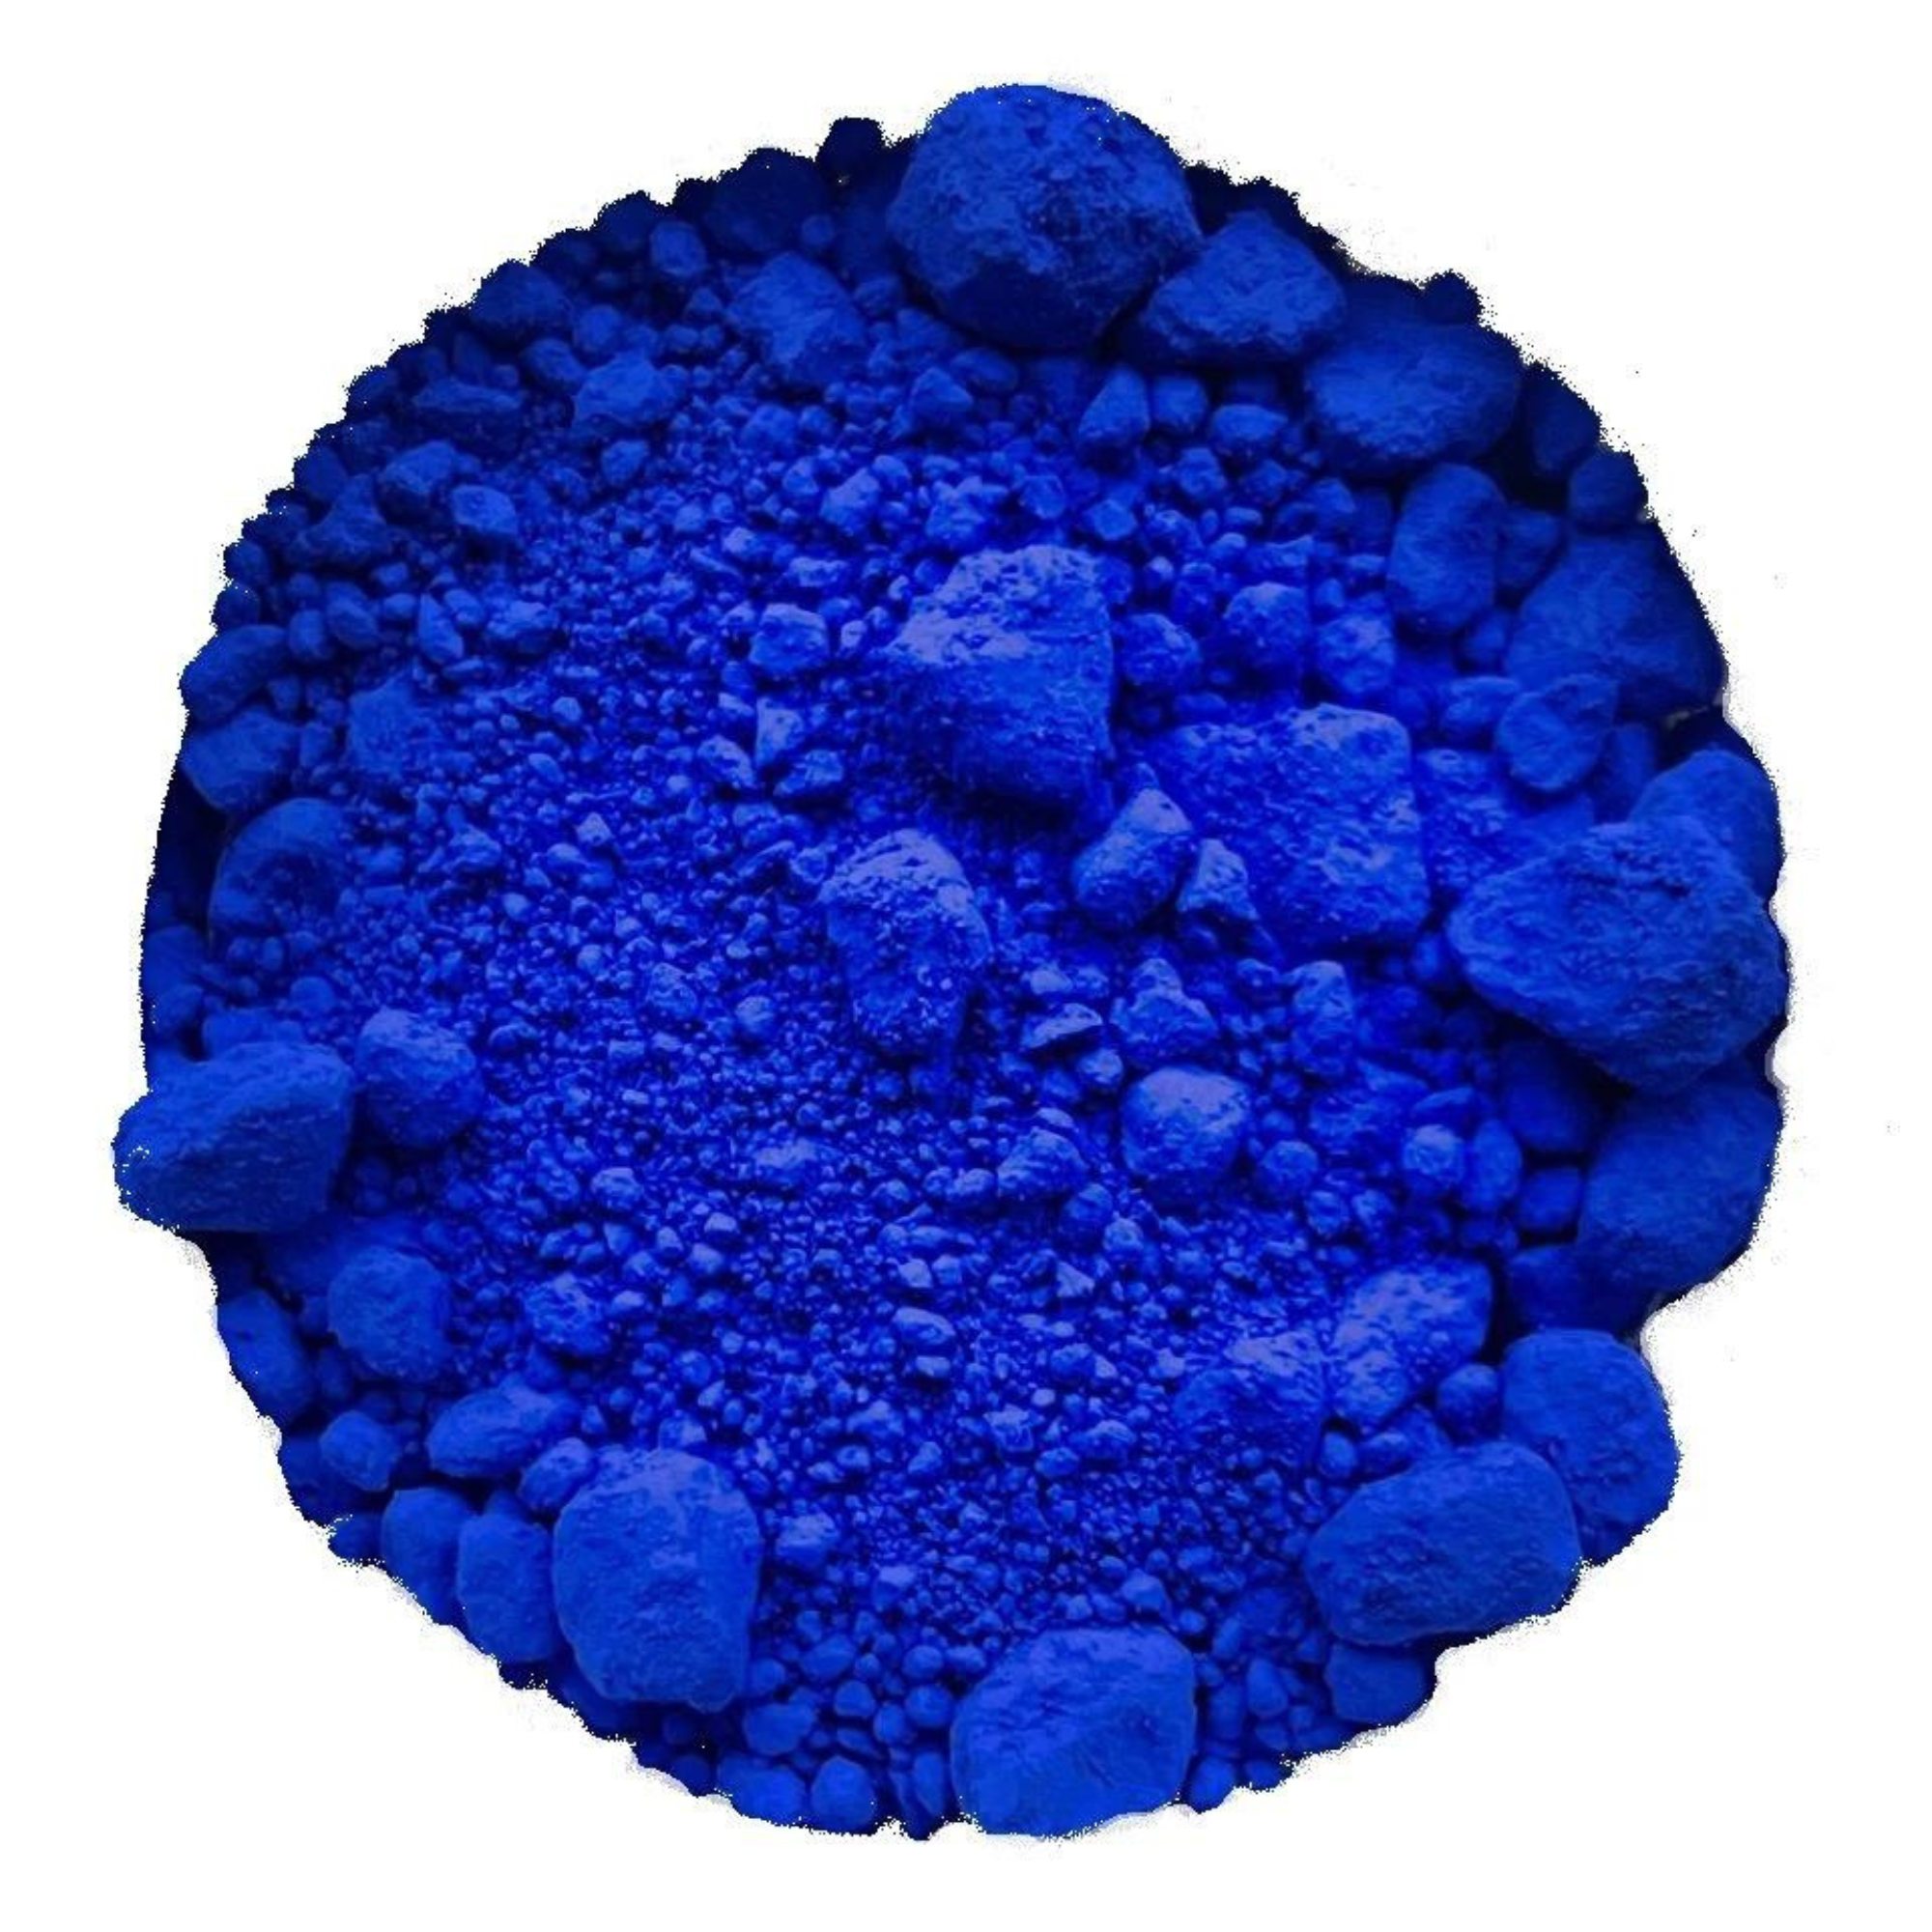 Powercolor Powder Pigment Ultramarine Blue 40ml